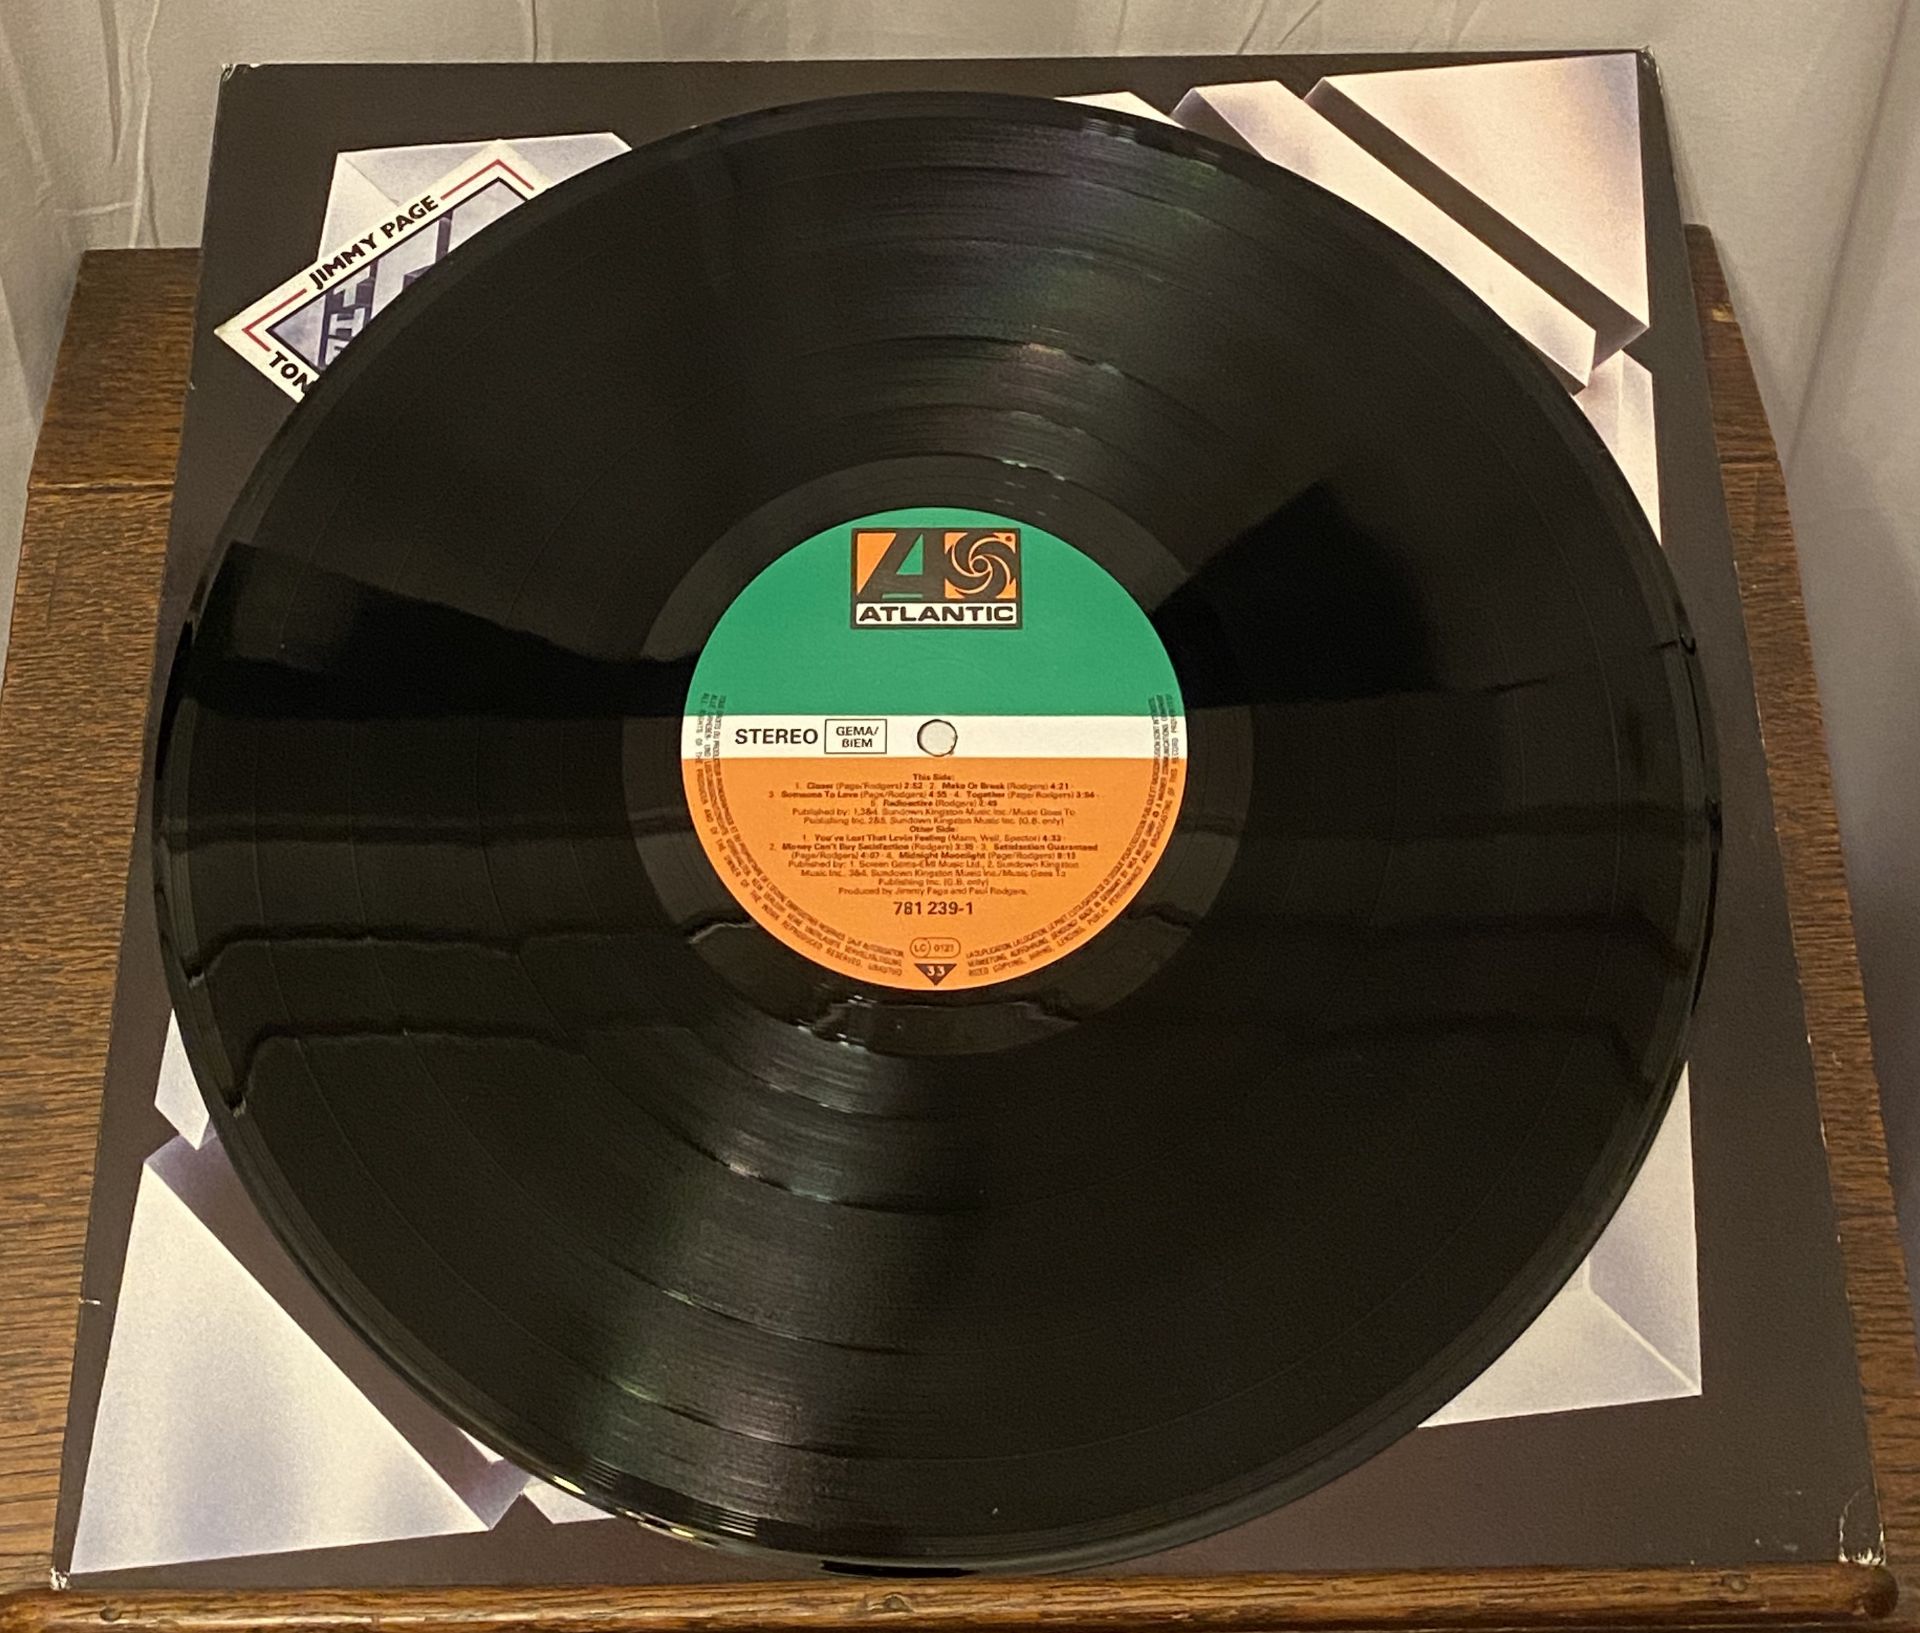 Kim Wilde Signed LP - Alan Partridge LP - The Firm LP. - Image 17 of 20